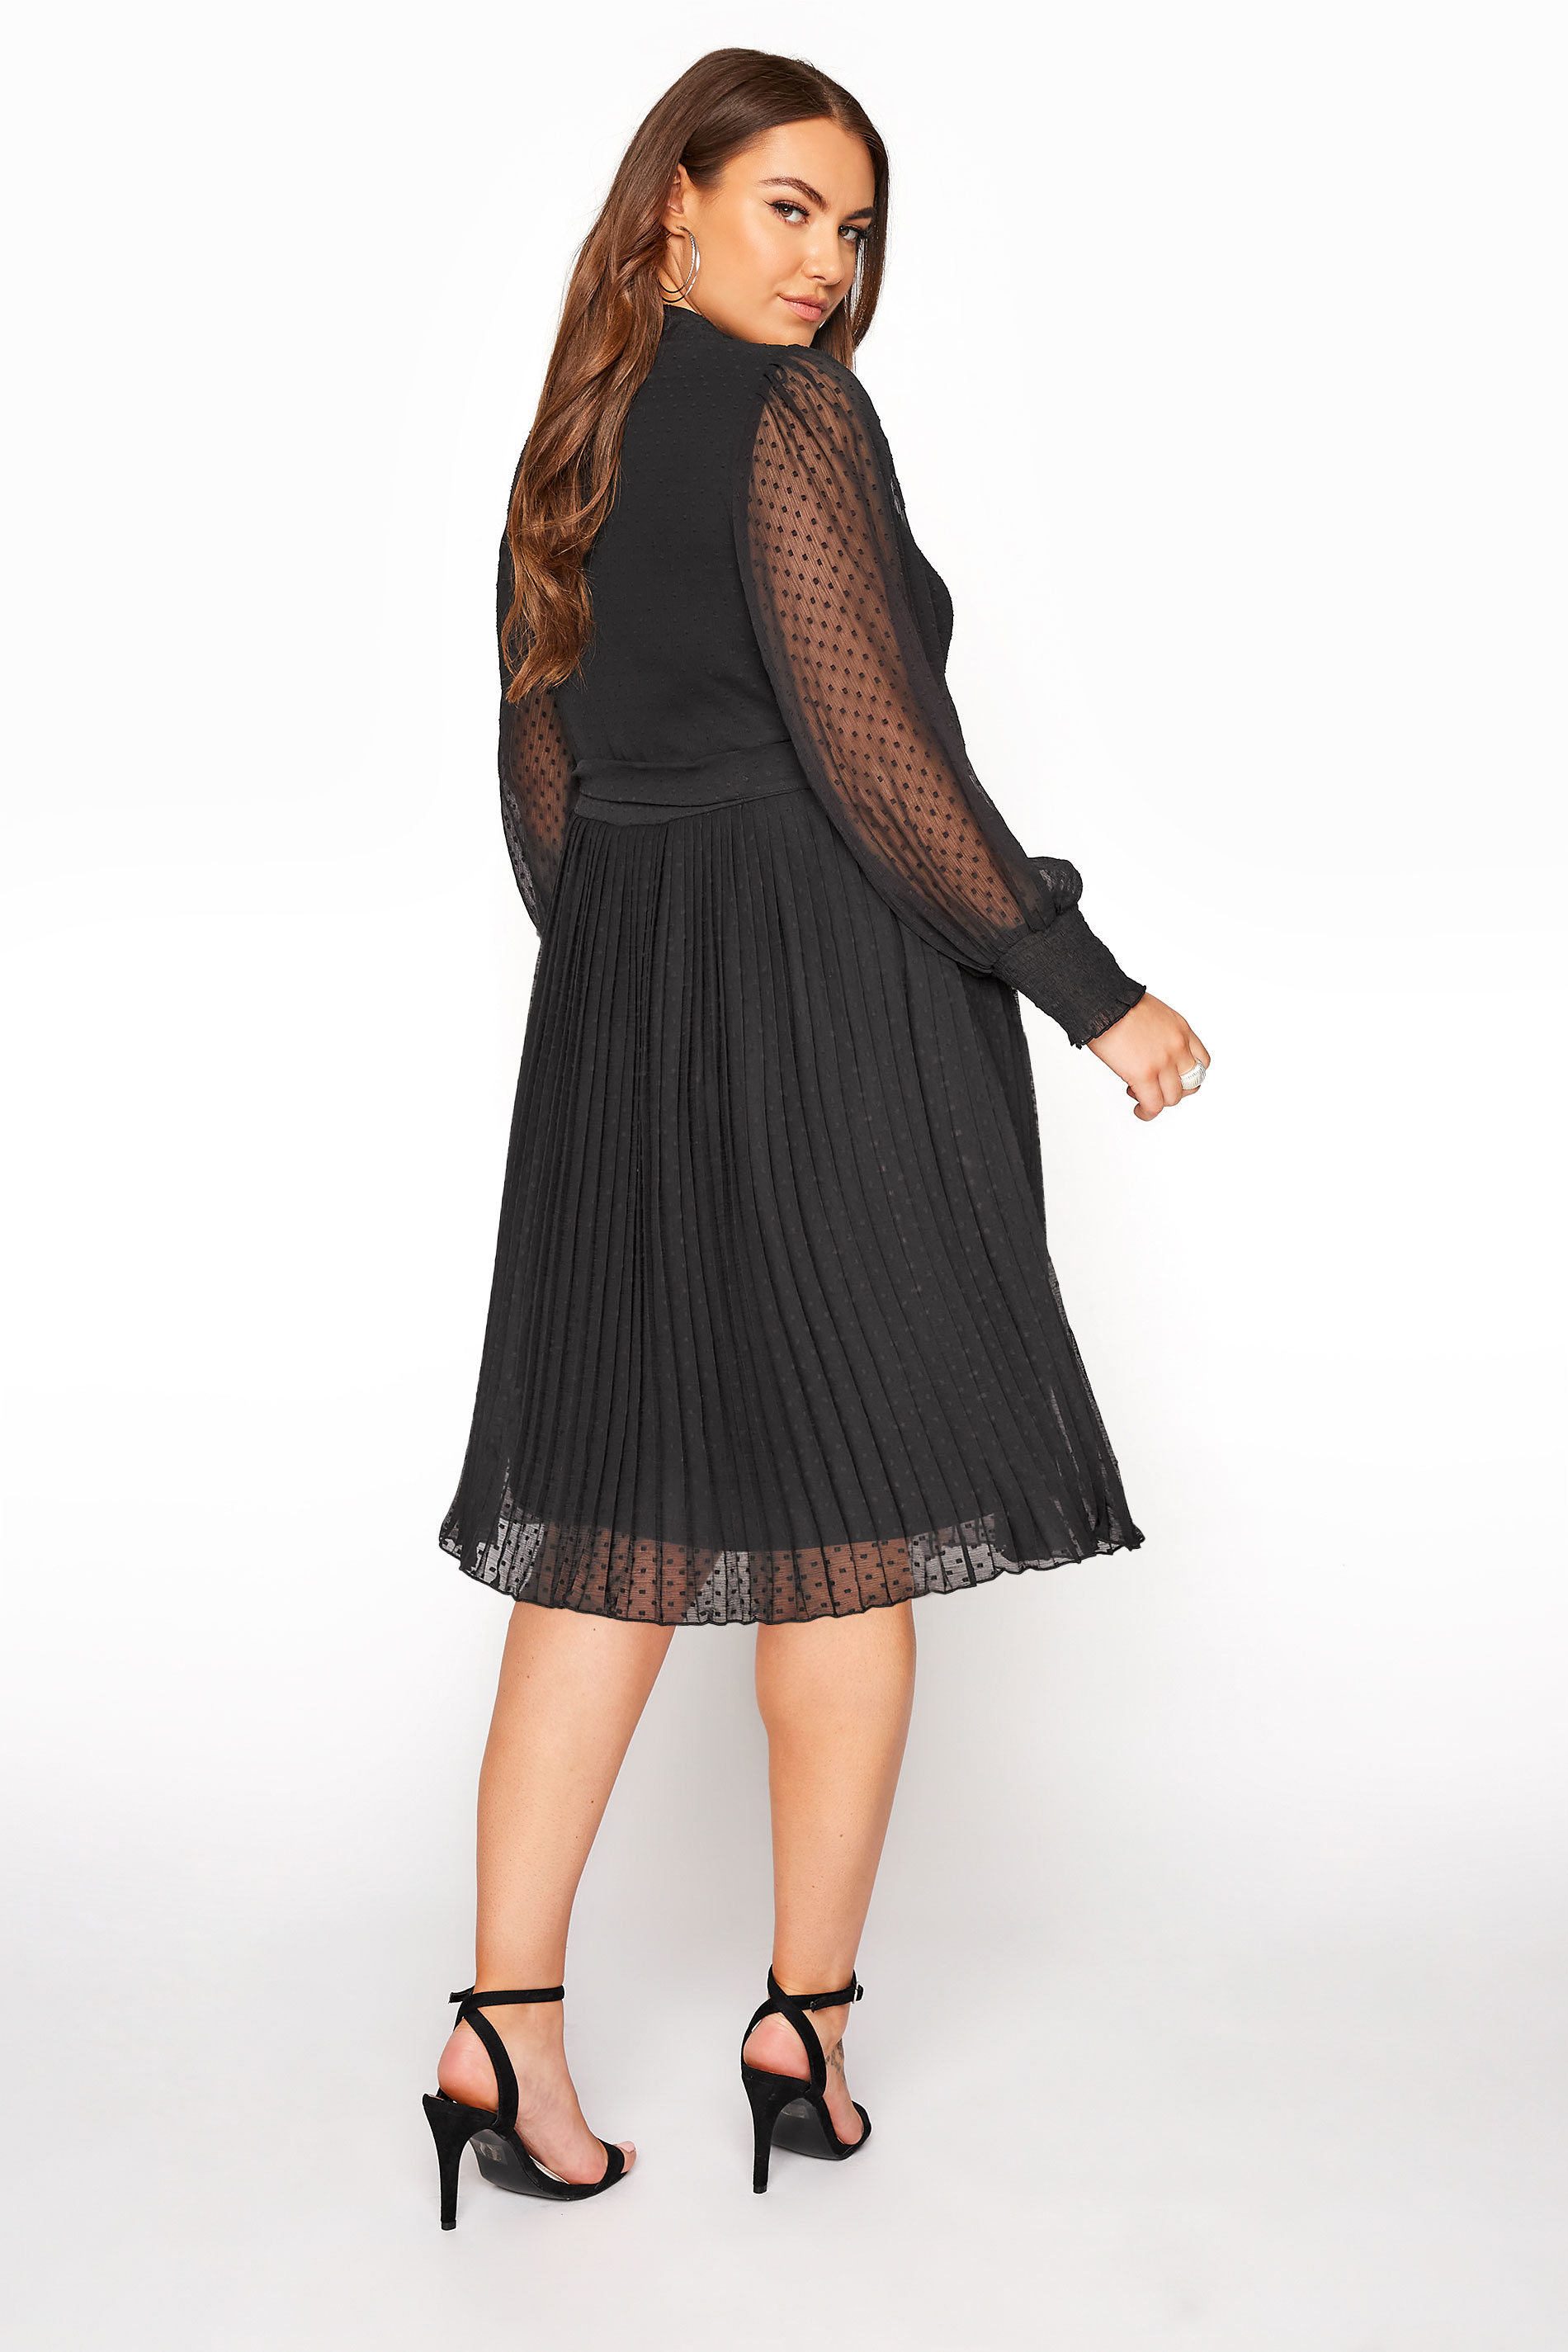 YOURS LONDON Plus Size Black Dobby Pleat Shirt Midi Dress | Yours Clothing 3